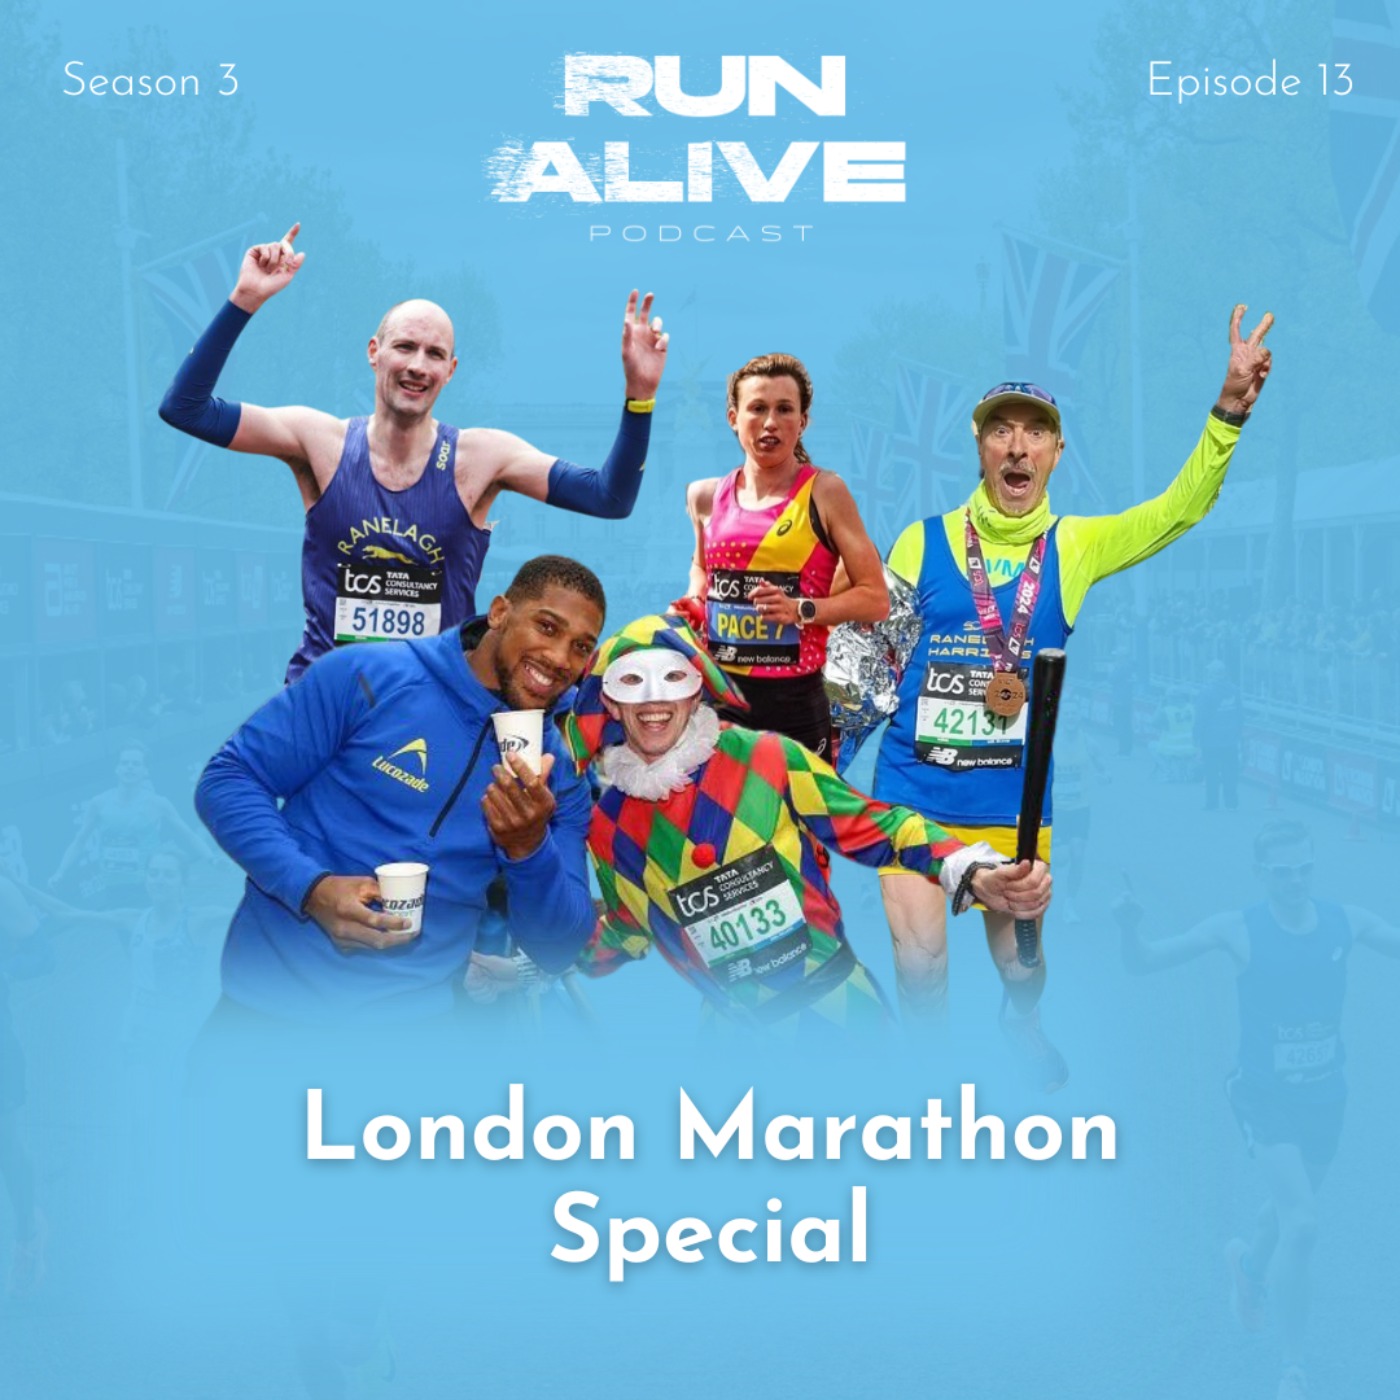 The London Marathon Special